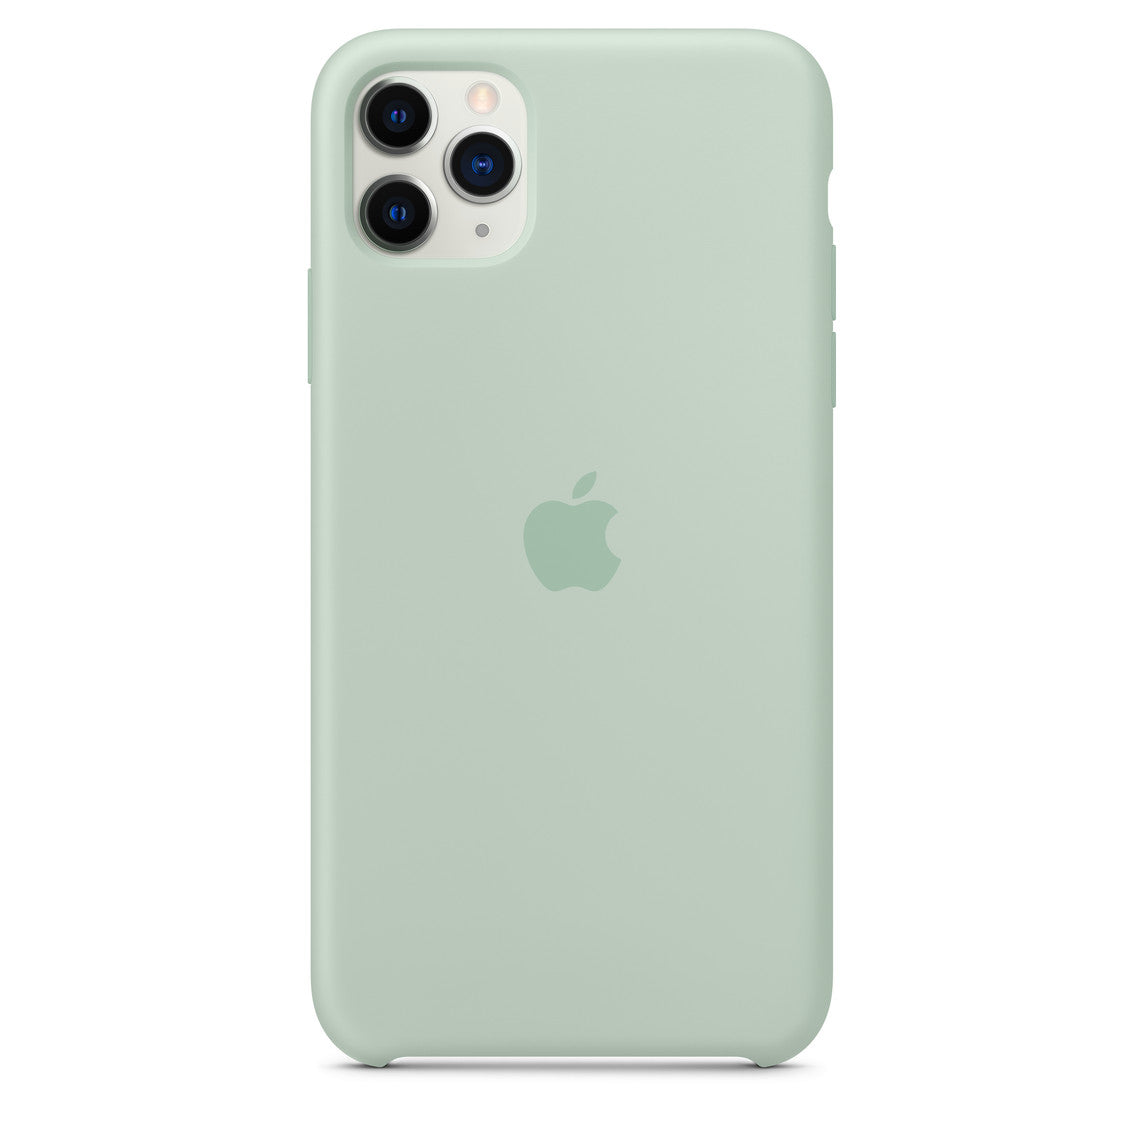 Apple iPhone 11 Pro Max Silicone Case Beryl Beryl New - Sealed